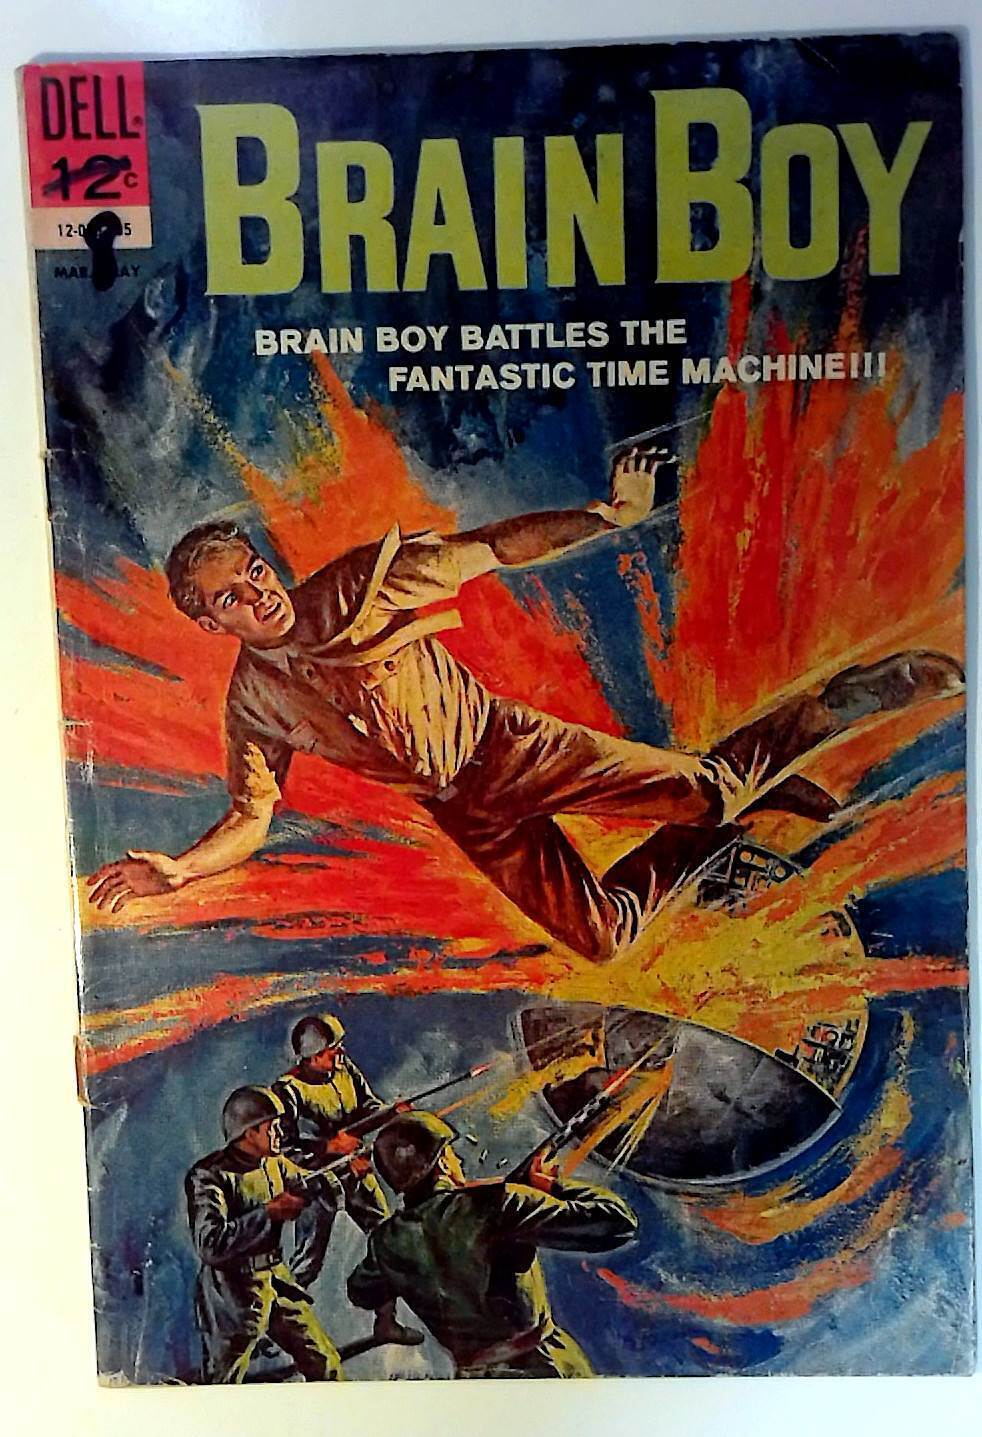 Brain Boy #4 Dell Comics (1963) GD+ 1st Print Comic Book